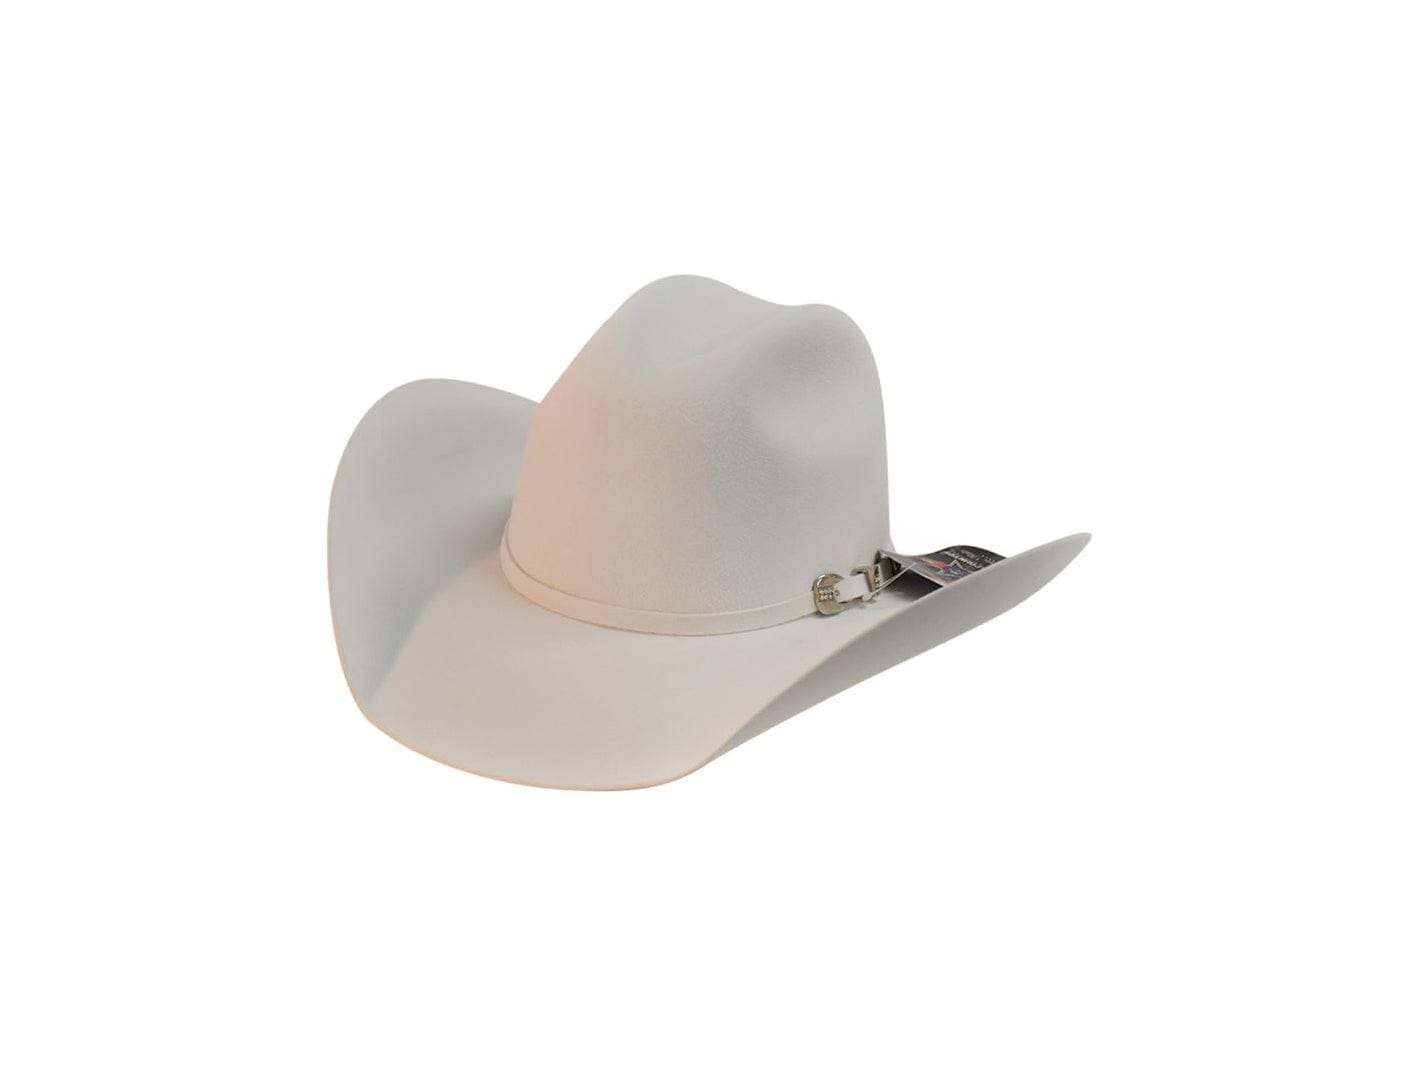 Exclusive "Austin" Texas Country Western Felt Cowboy Hat White